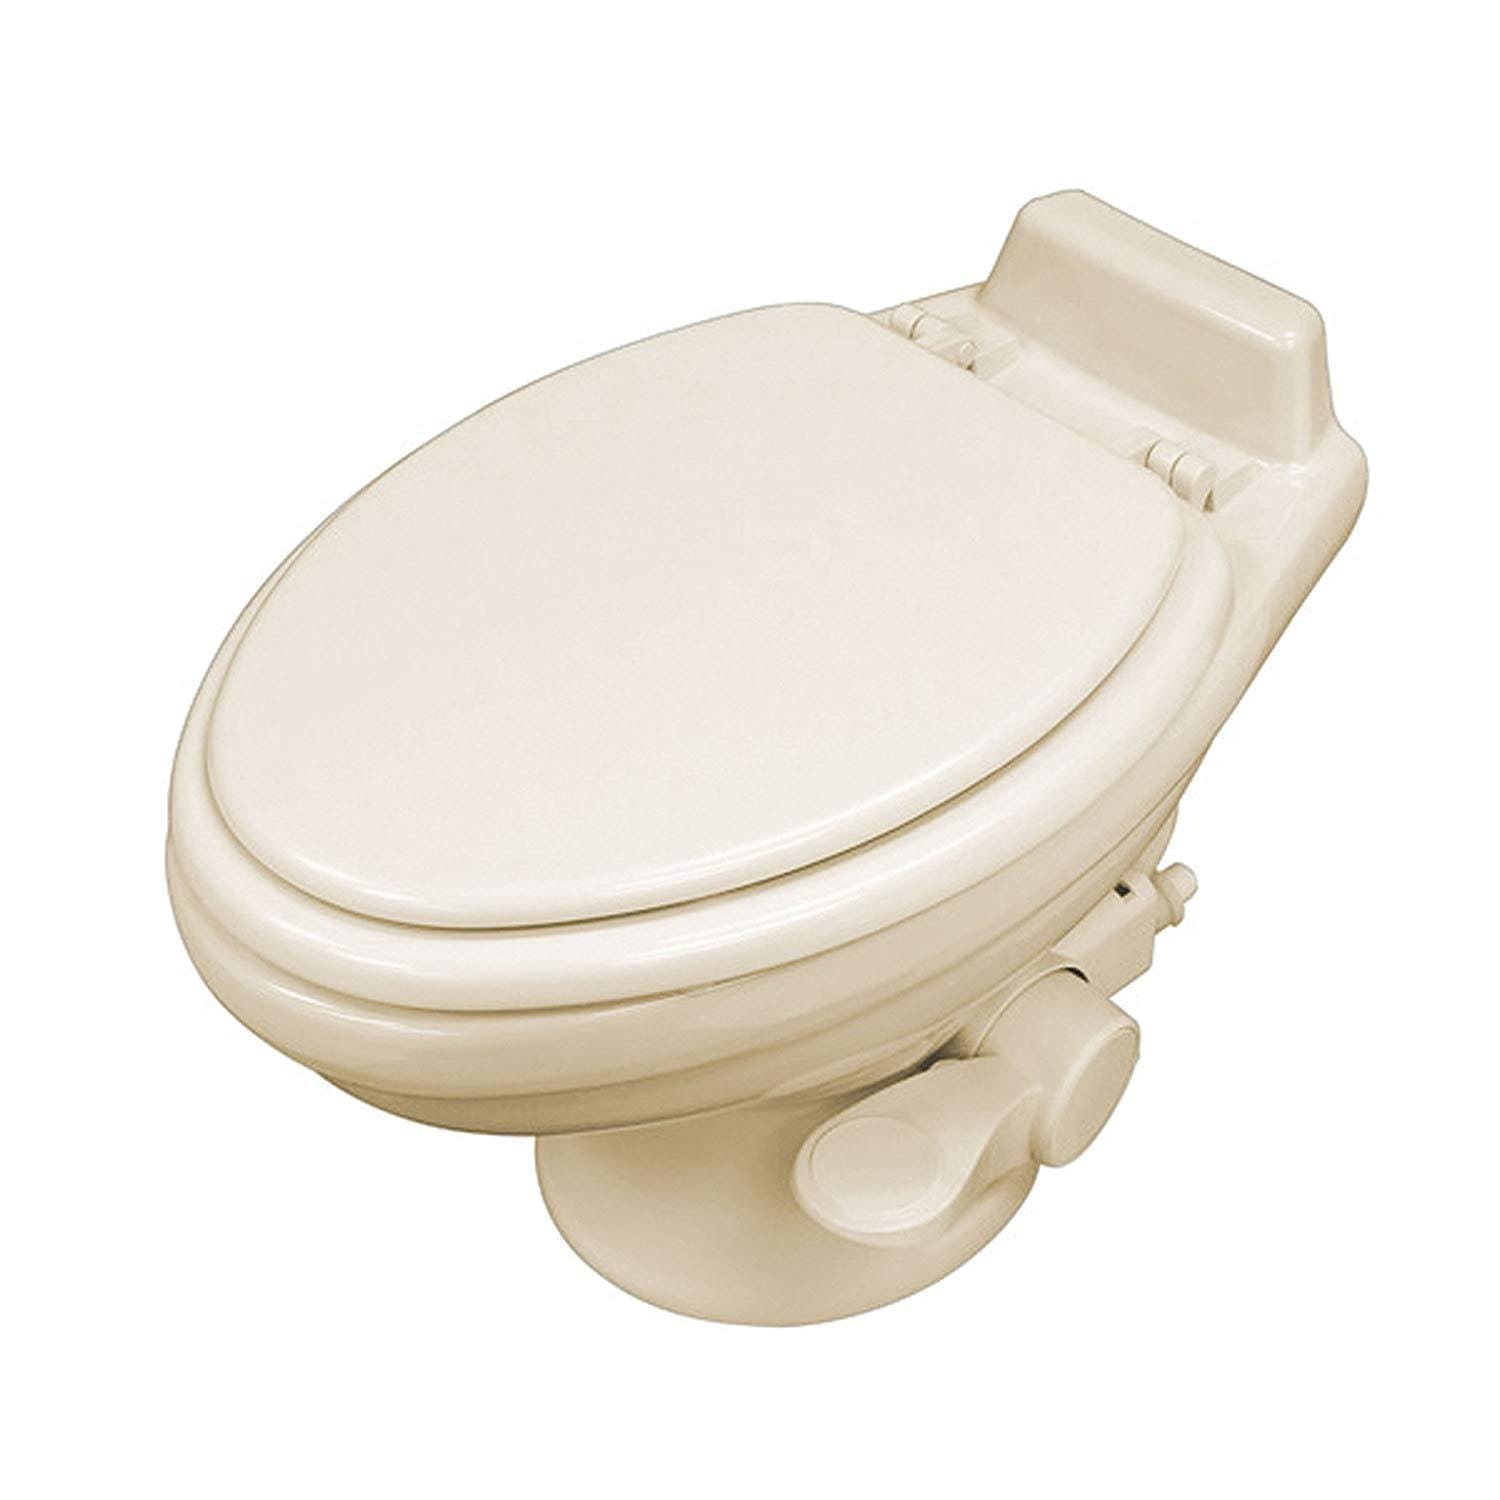 Dometic 302321683 Low Profile ReVolution 321 Bone Elongated Deep Ceramic Foot Flush Toilet